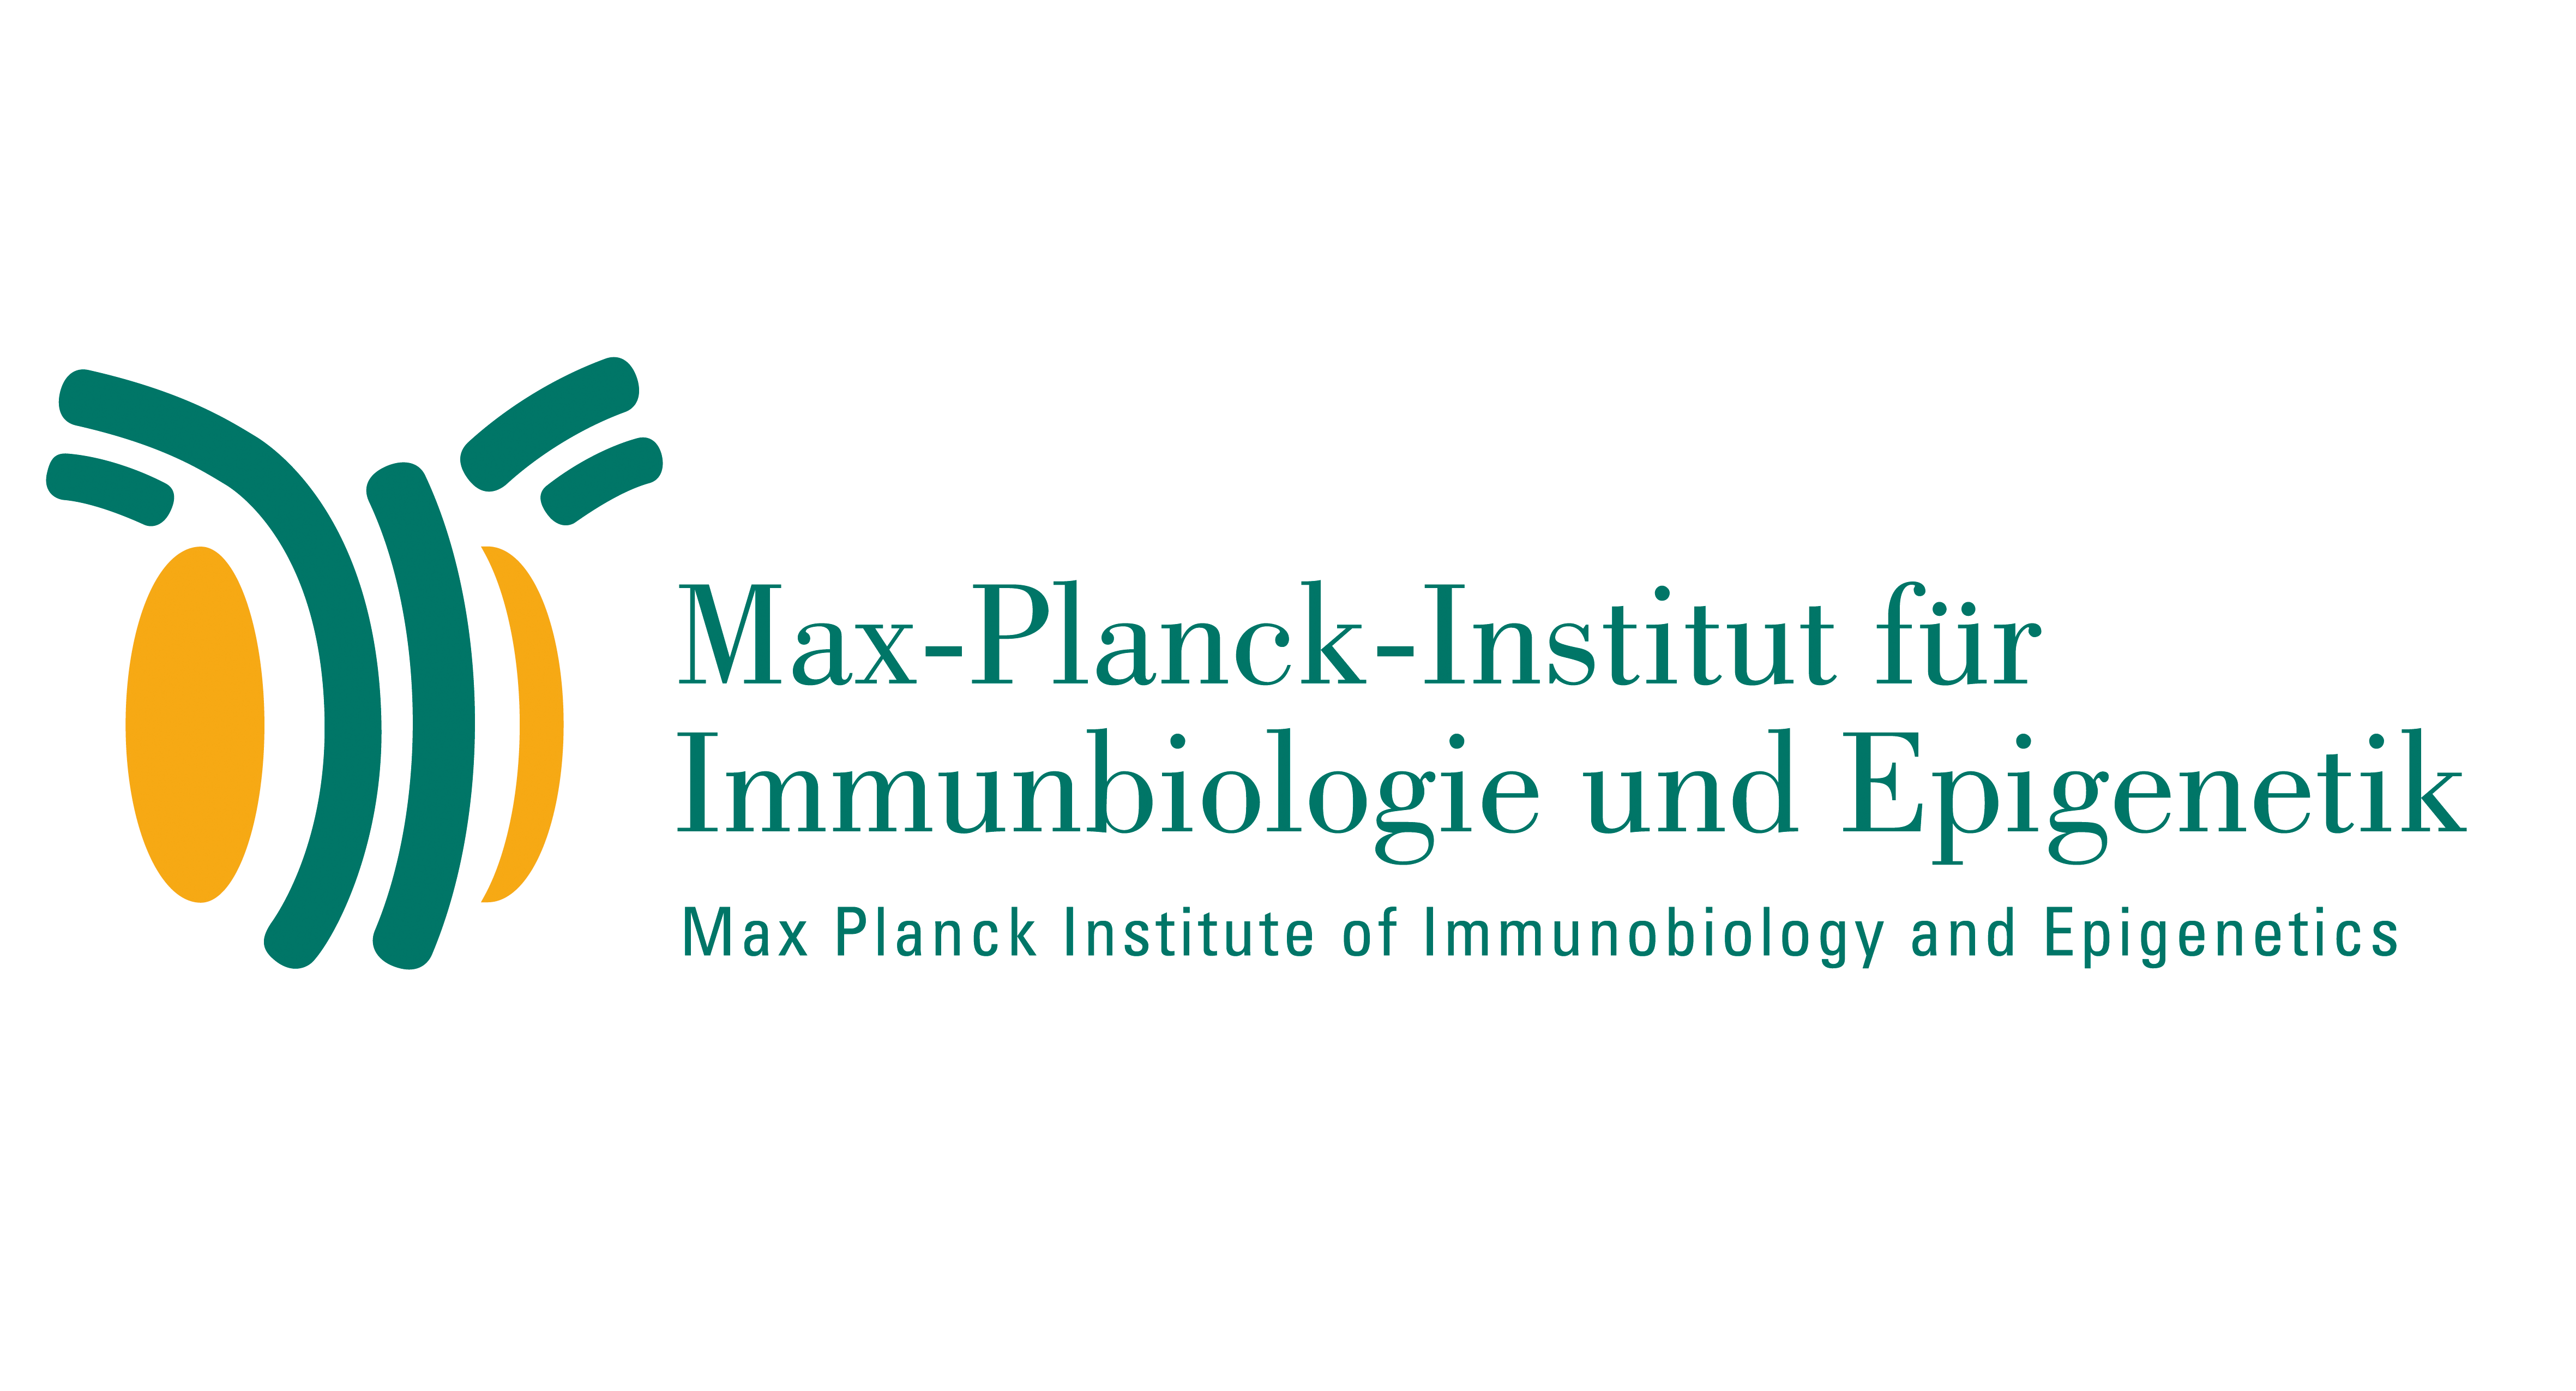 Max Planck Institute of Immunology and Epigenetics